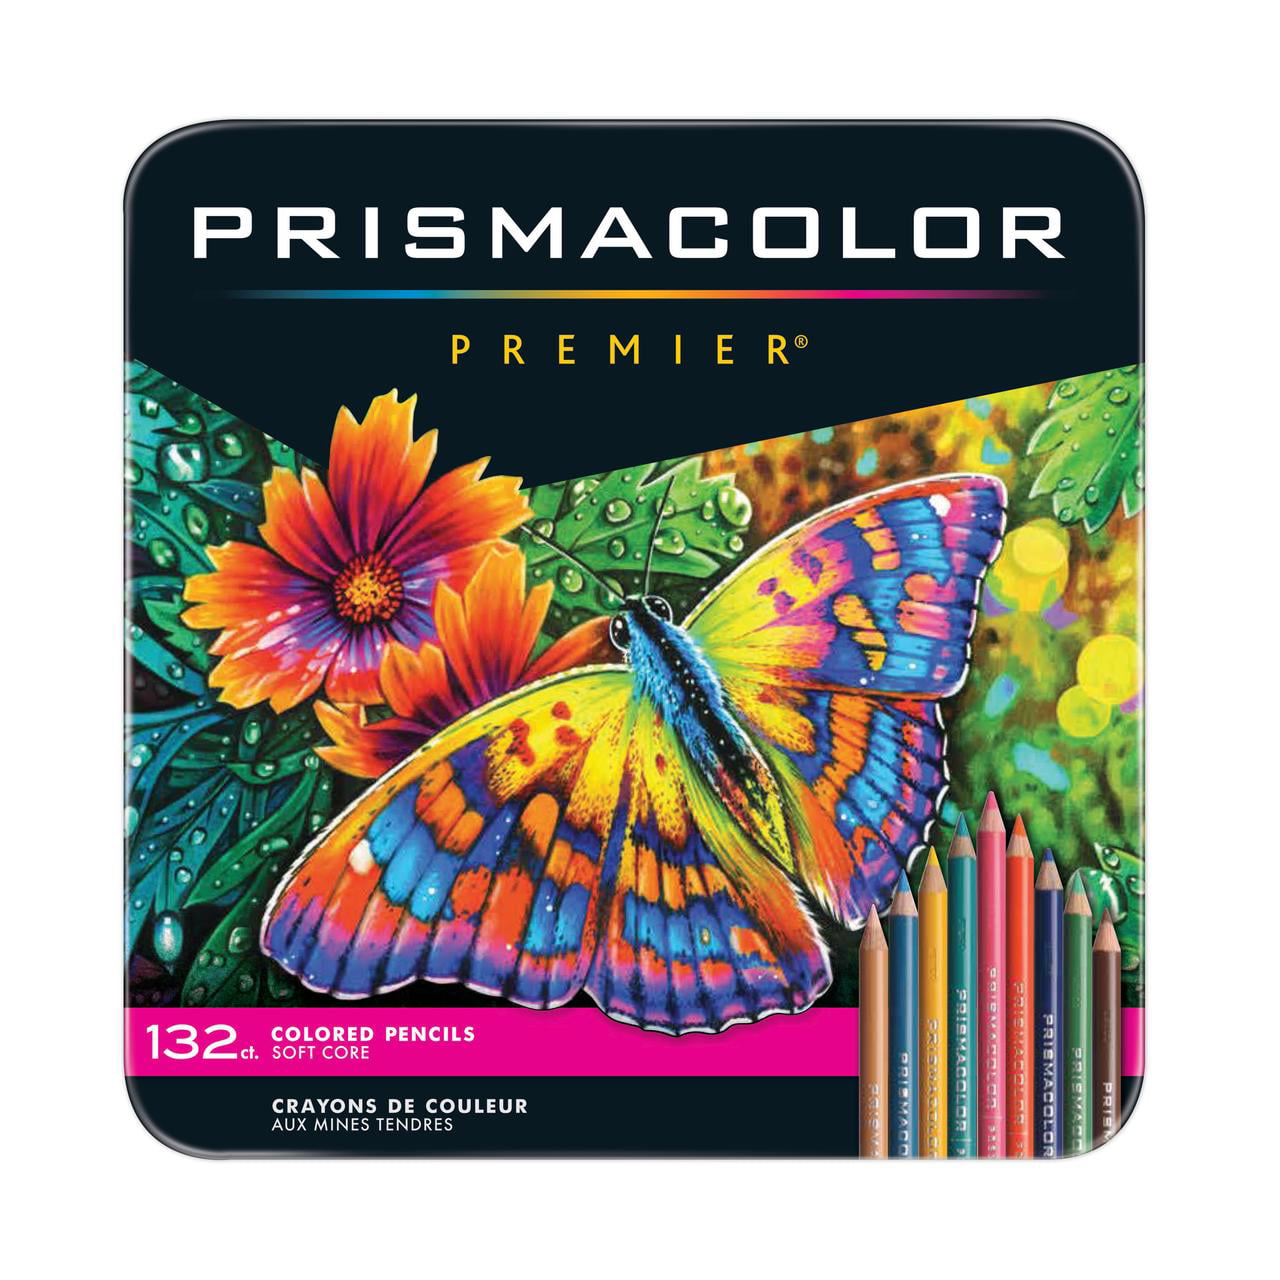 Colored Pencils 72 Count Set-Coloring Pencils Color Pencil for Adults Coloring